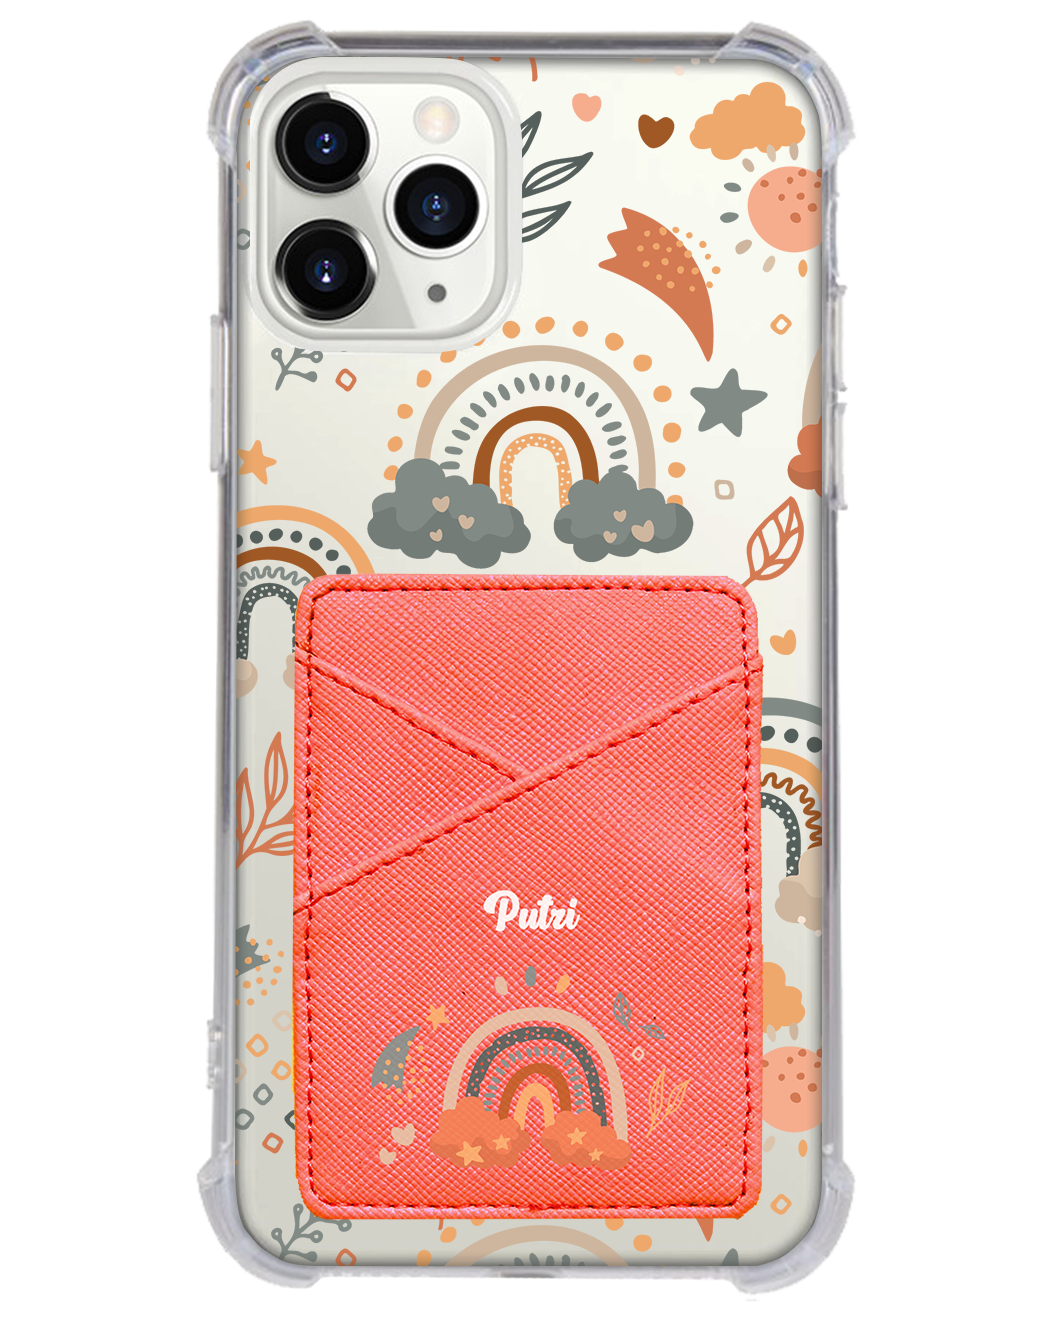 iPhone Phone Wallet Case - Boho 2.0